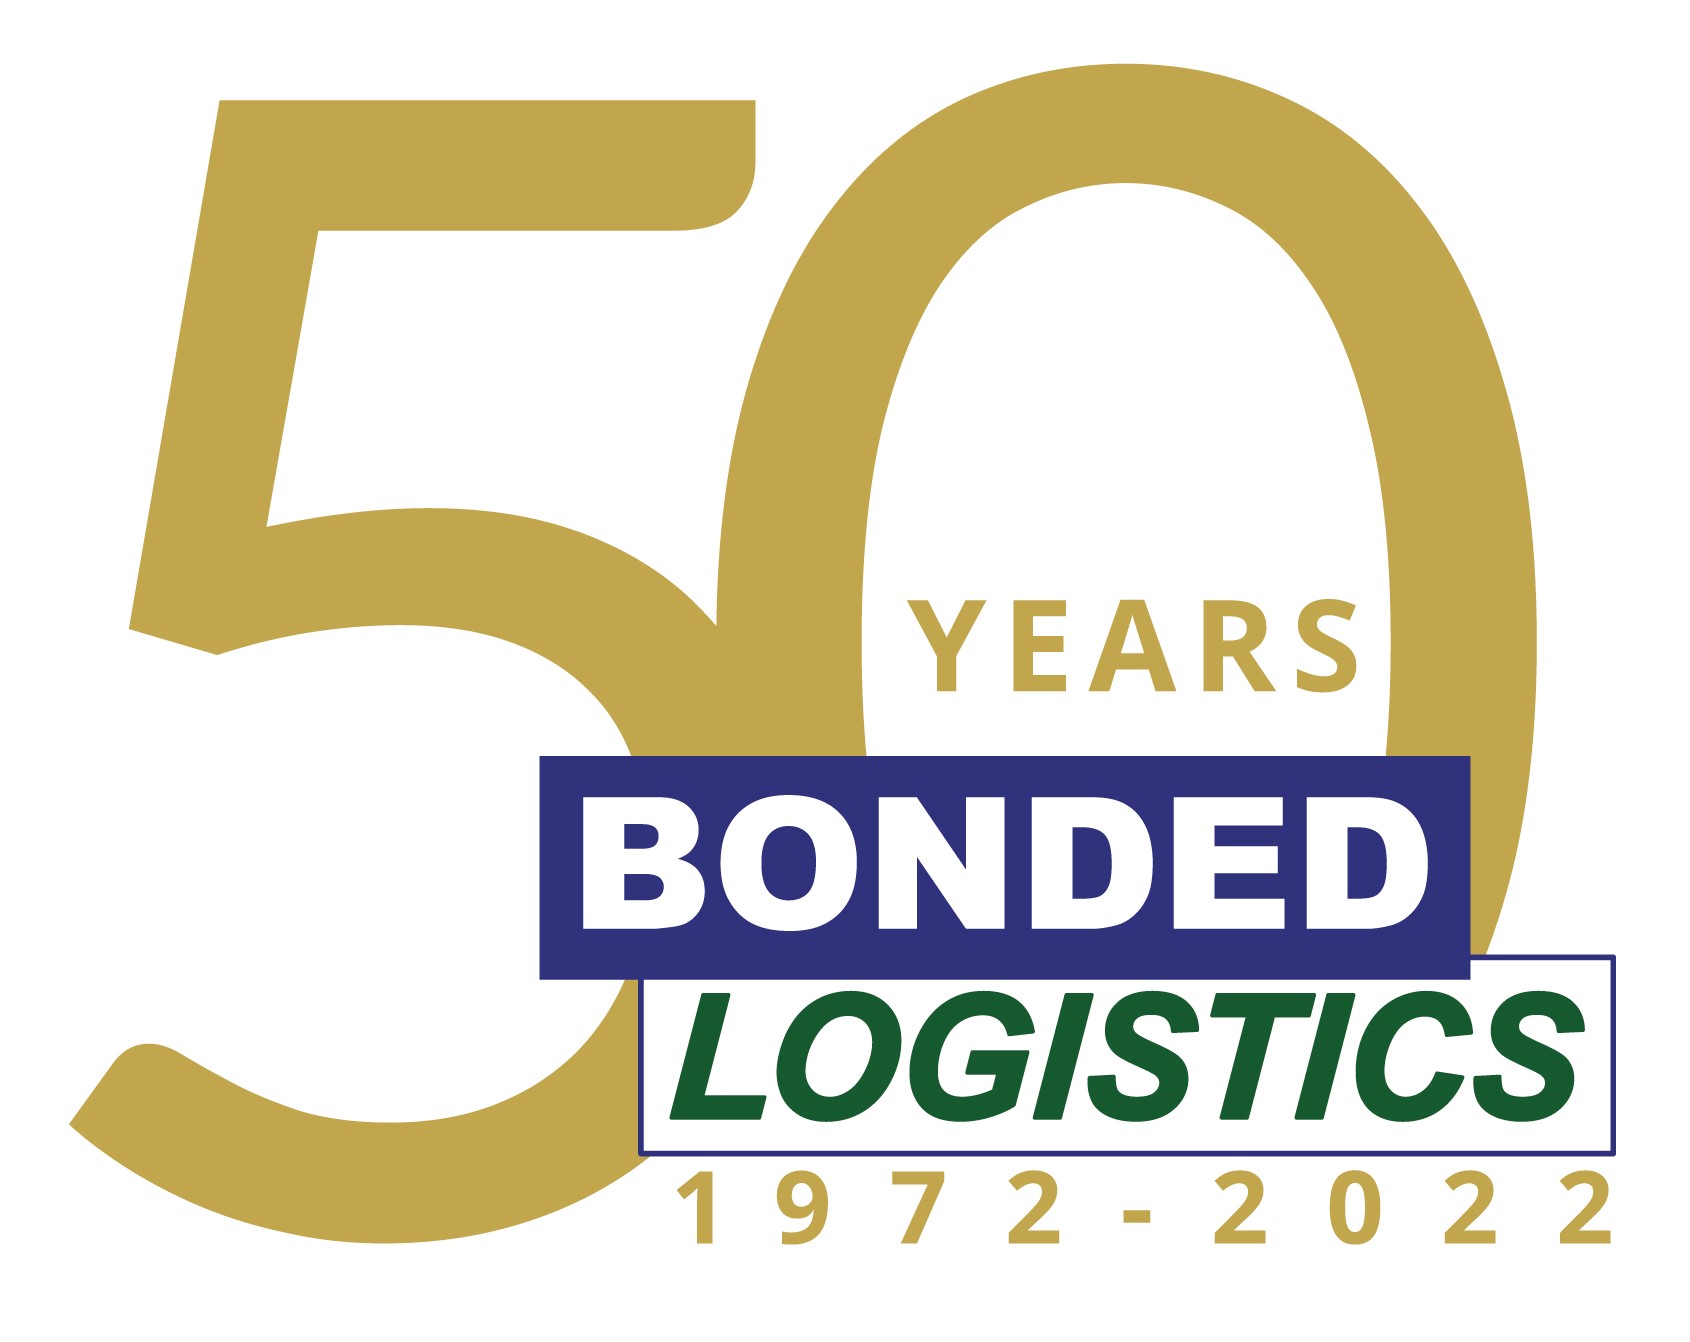 bonded-50th-logo-Tight